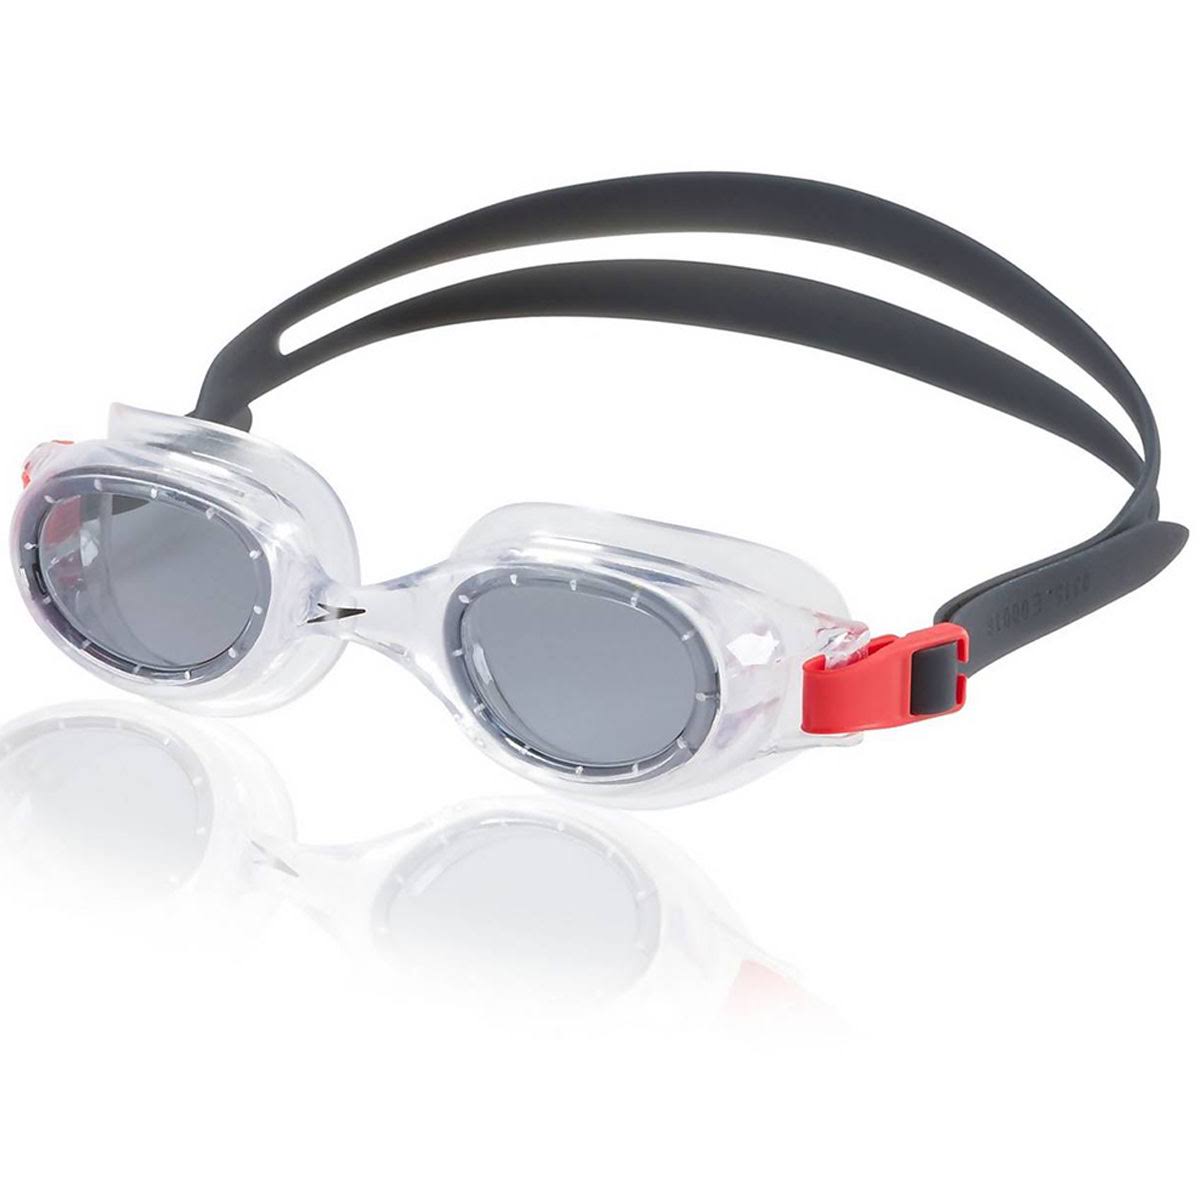 Speedo Recreation Hydrospex Classic Swimming Goggles